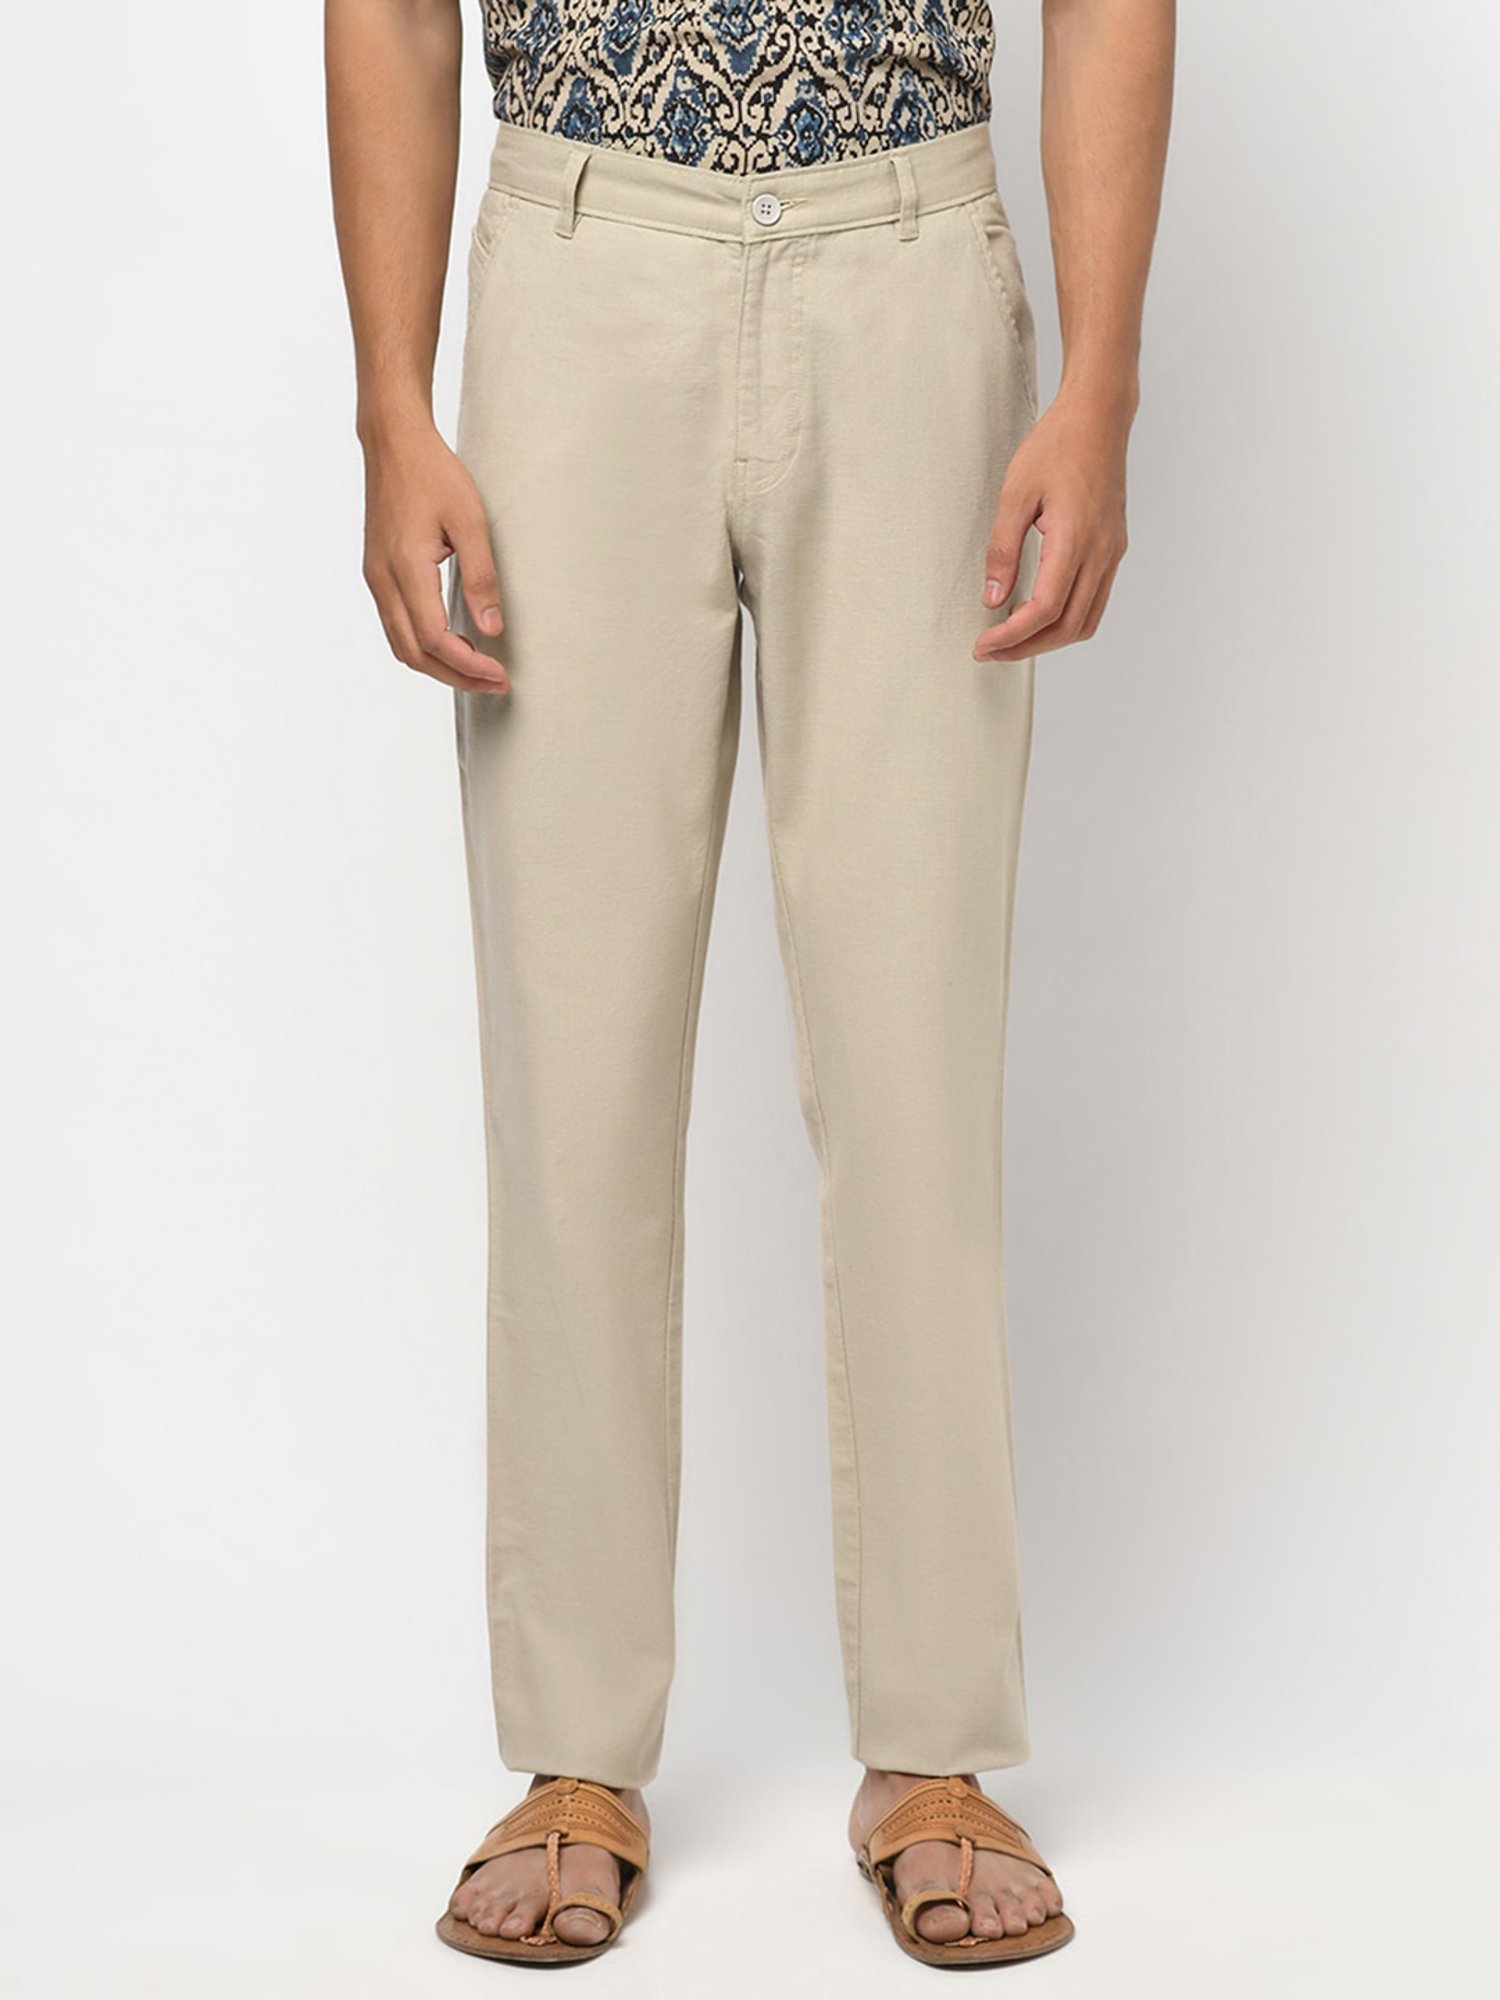 Buy Brown Cotton Slim Fit Pants for Men Online at Fabindia | 20169524